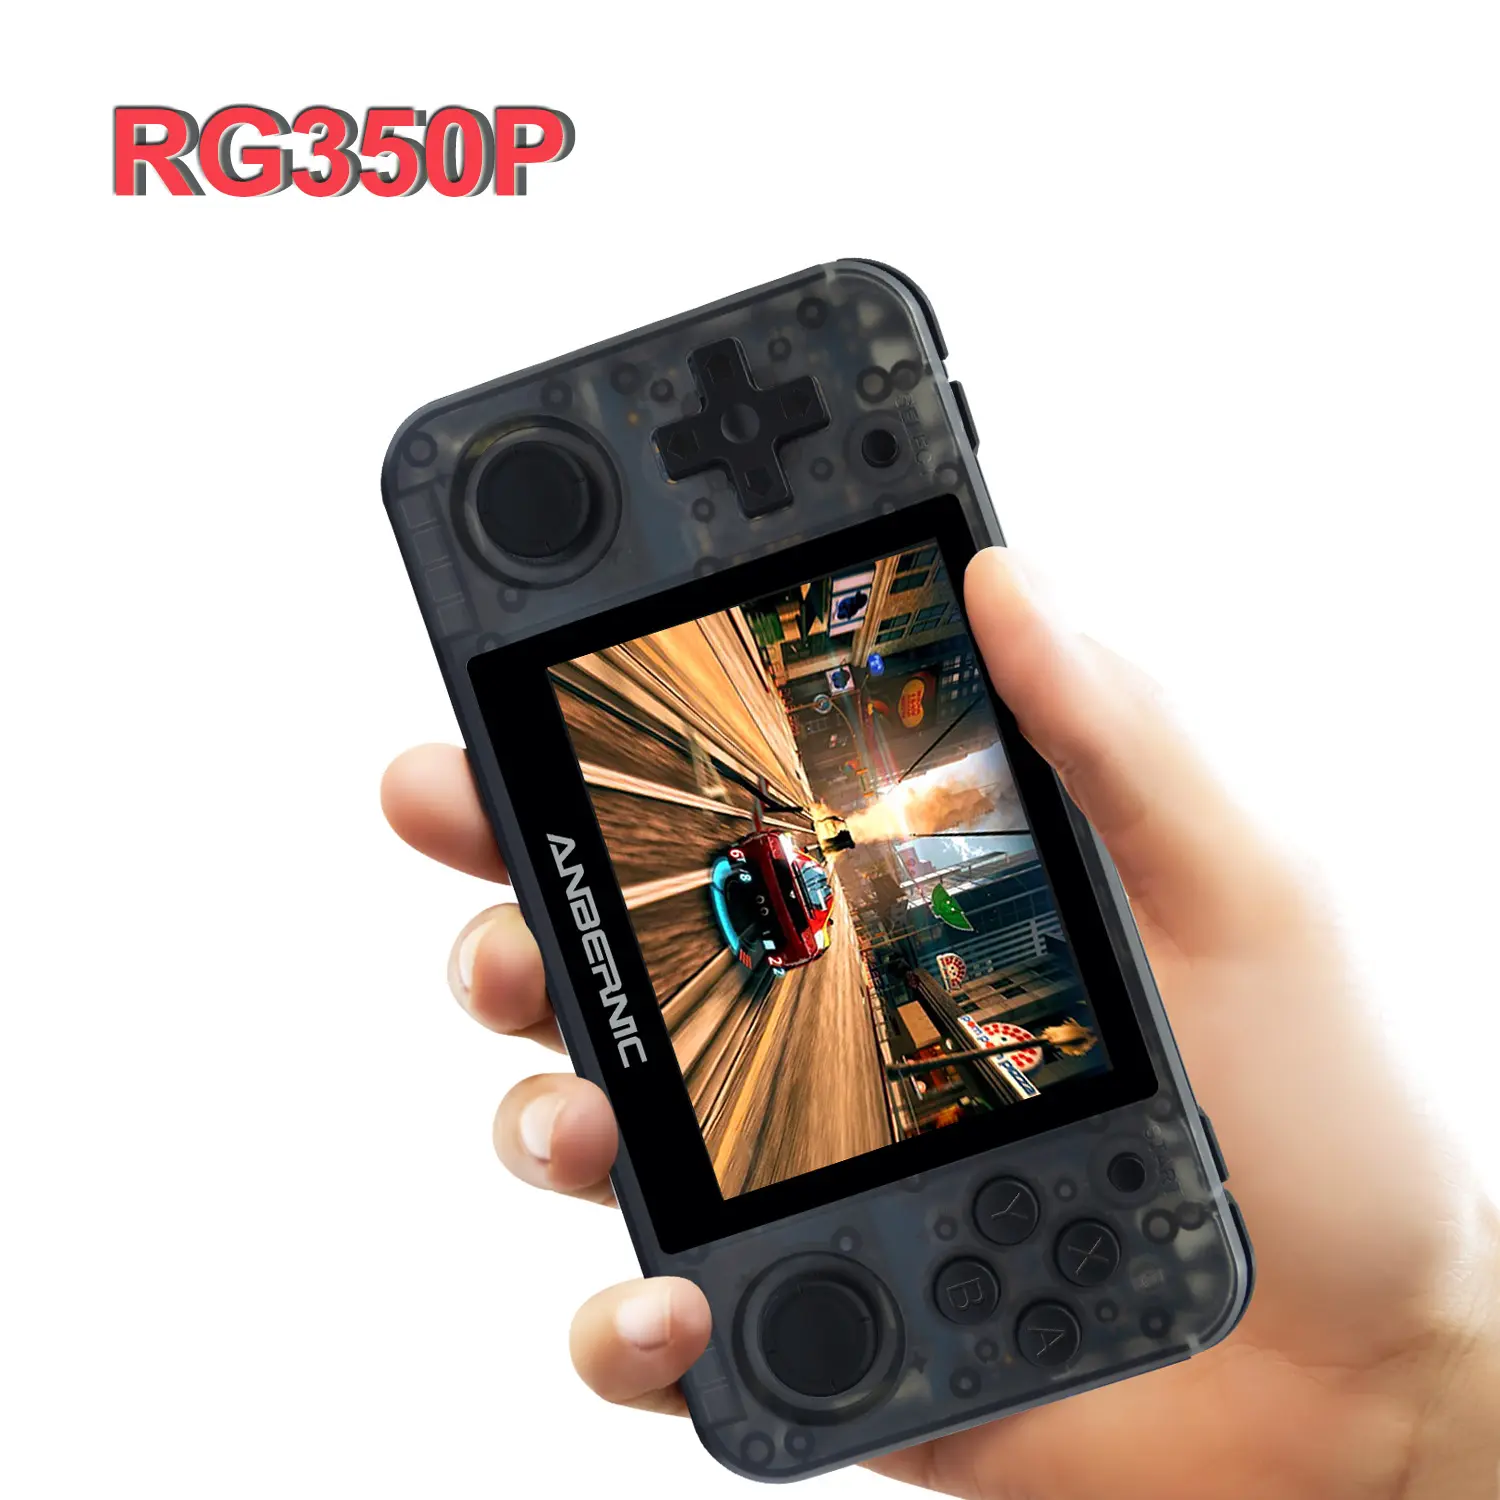 ANBERNIC RG350P 3.5 "IPS מסך נייד וידאו שחור משחק קונסולת משלוח משחקים להורדה